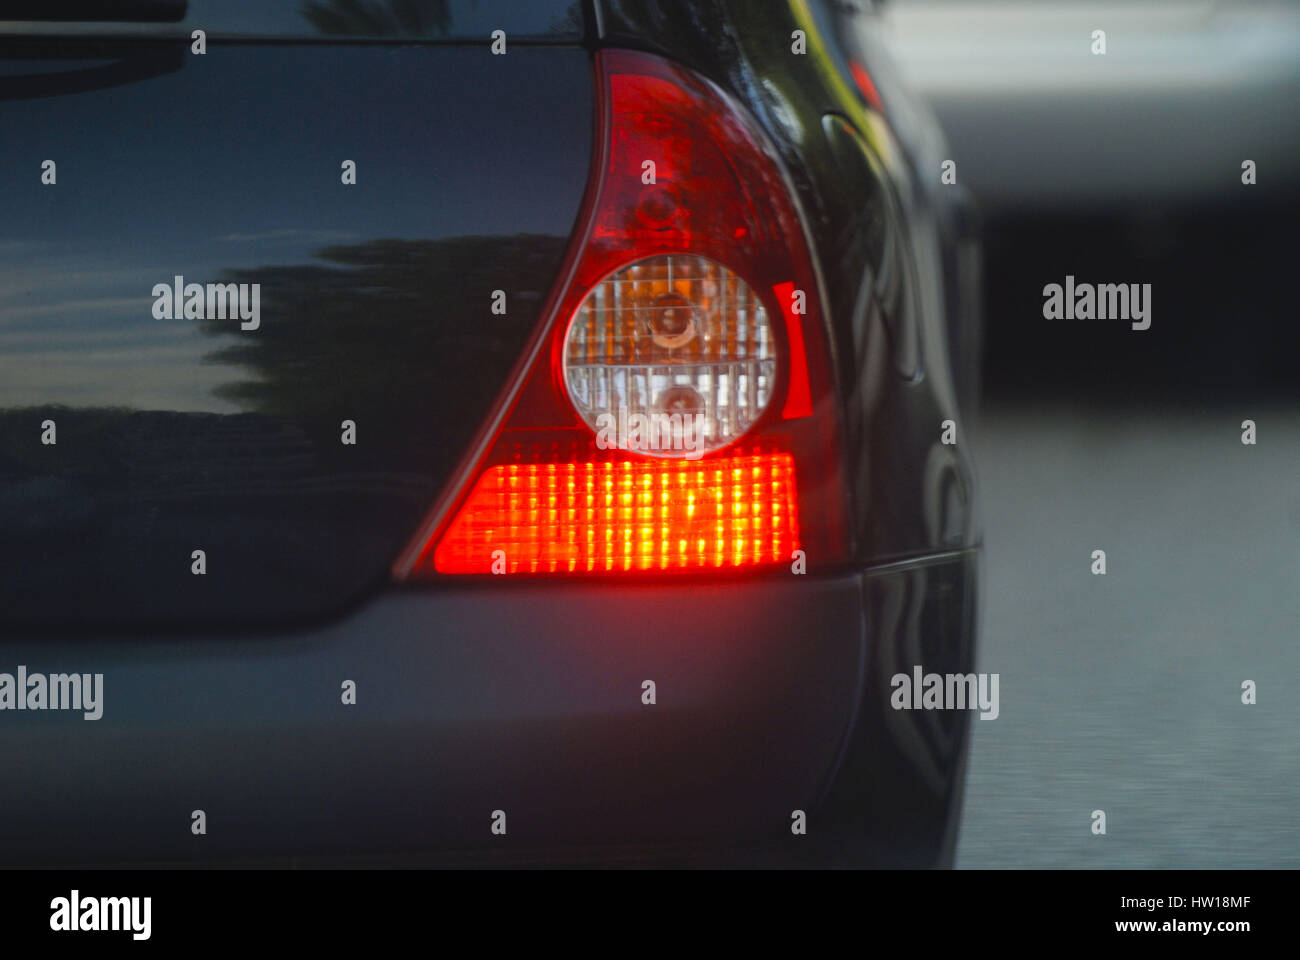 https://c8.alamy.com/comp/HW18MF/stoplight-in-the-car-bremslicht-am-auto-HW18MF.jpg